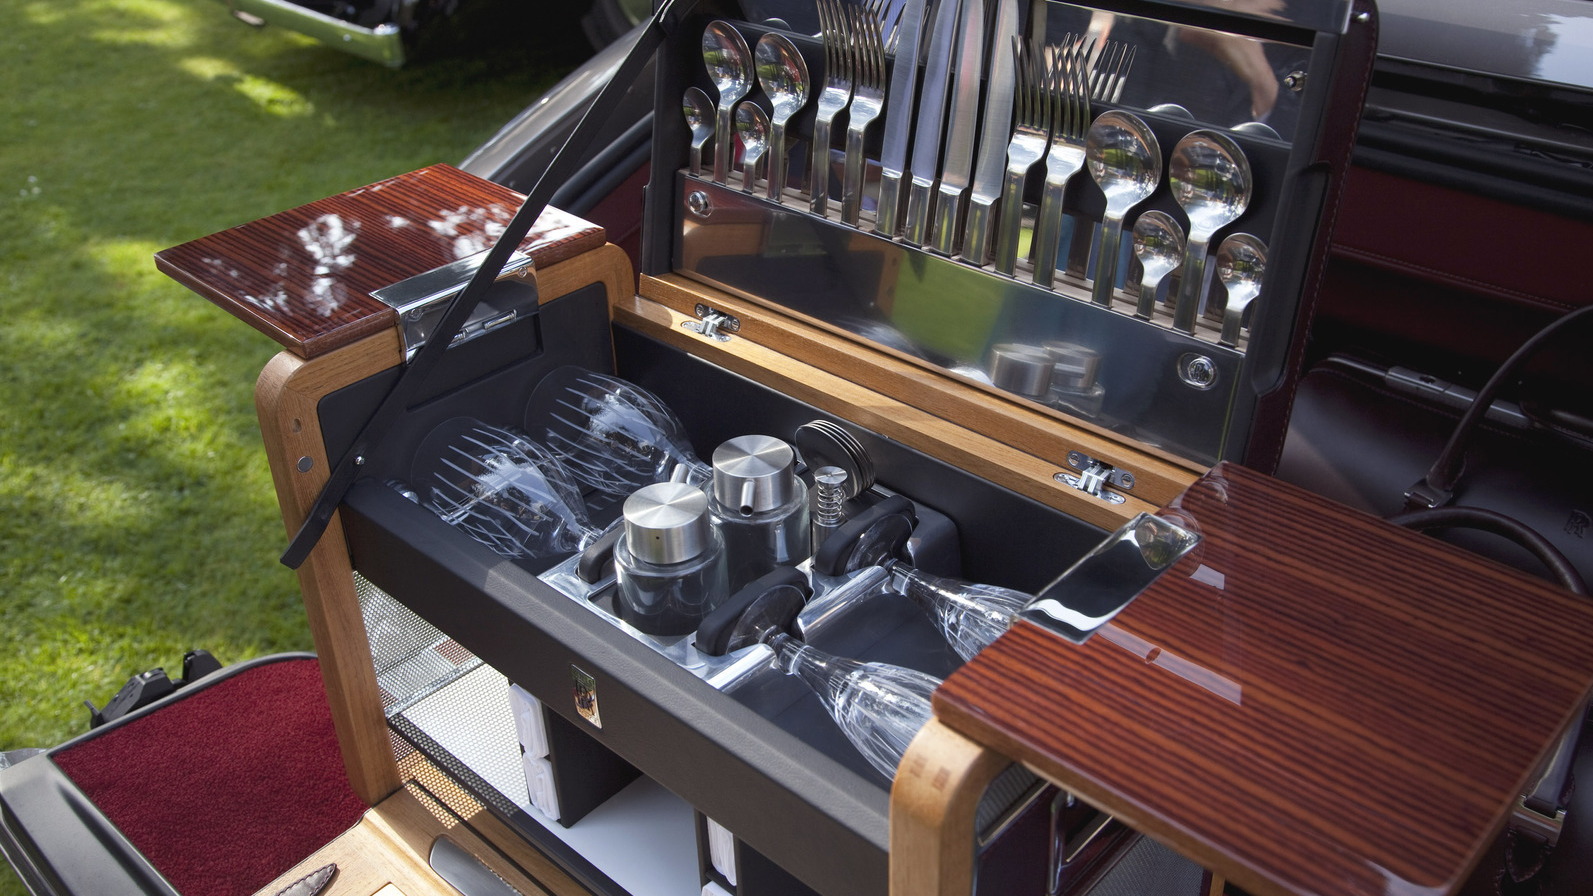 Rolls-Royce designs a bespoke picnic set for the Phantom